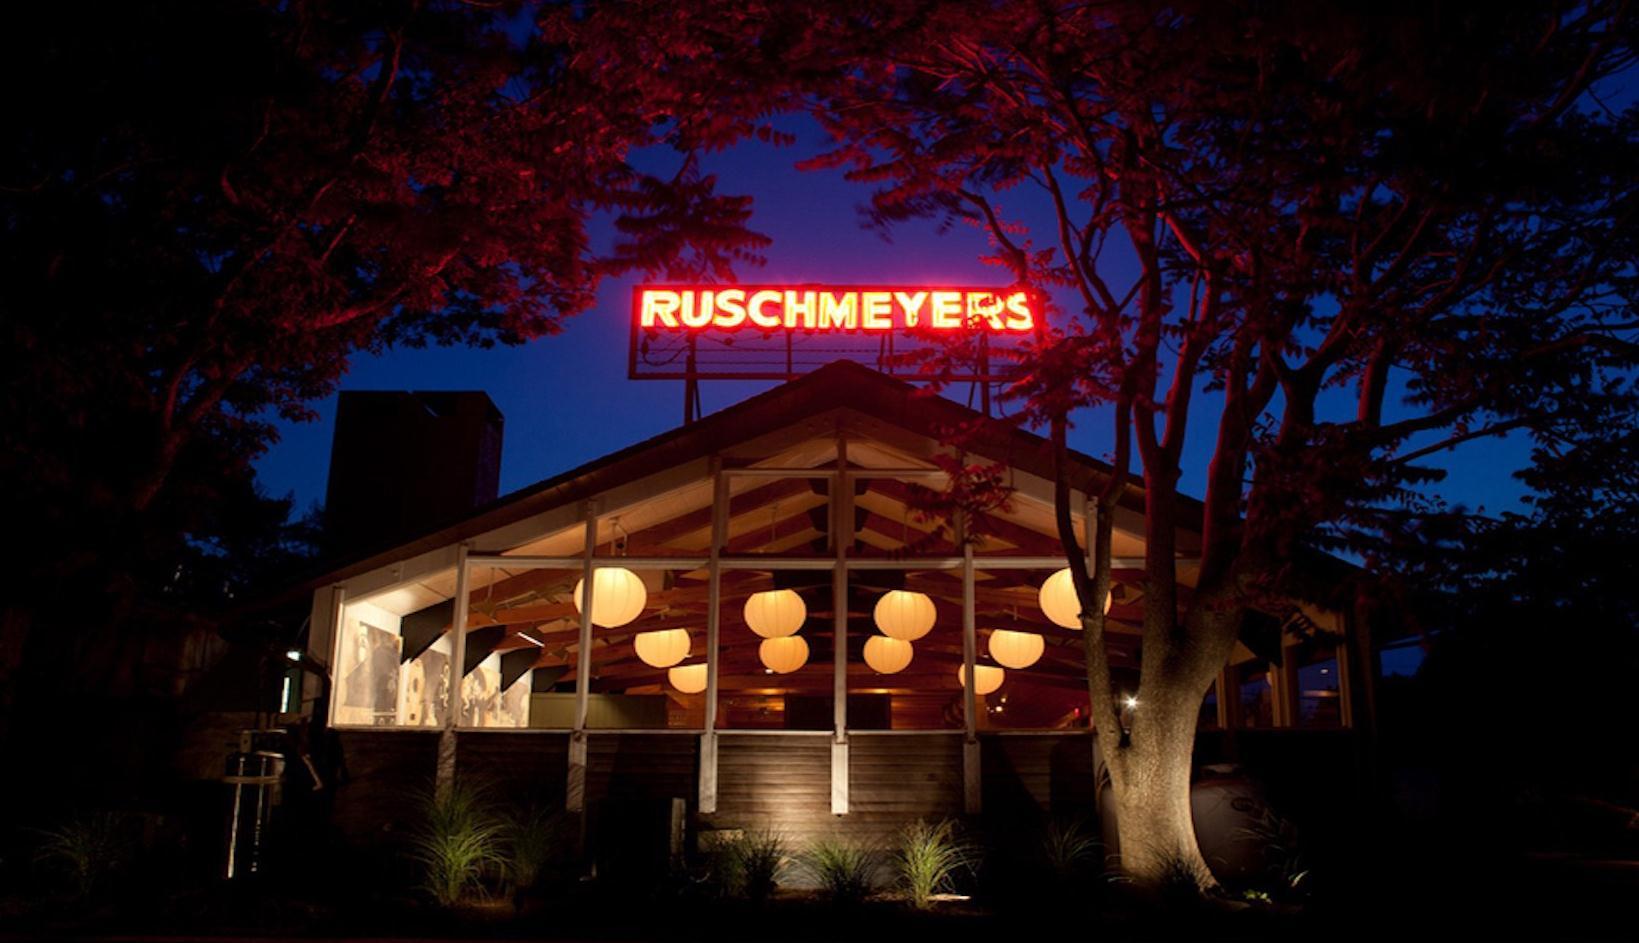 Ruschmeyers in Montauk, NY